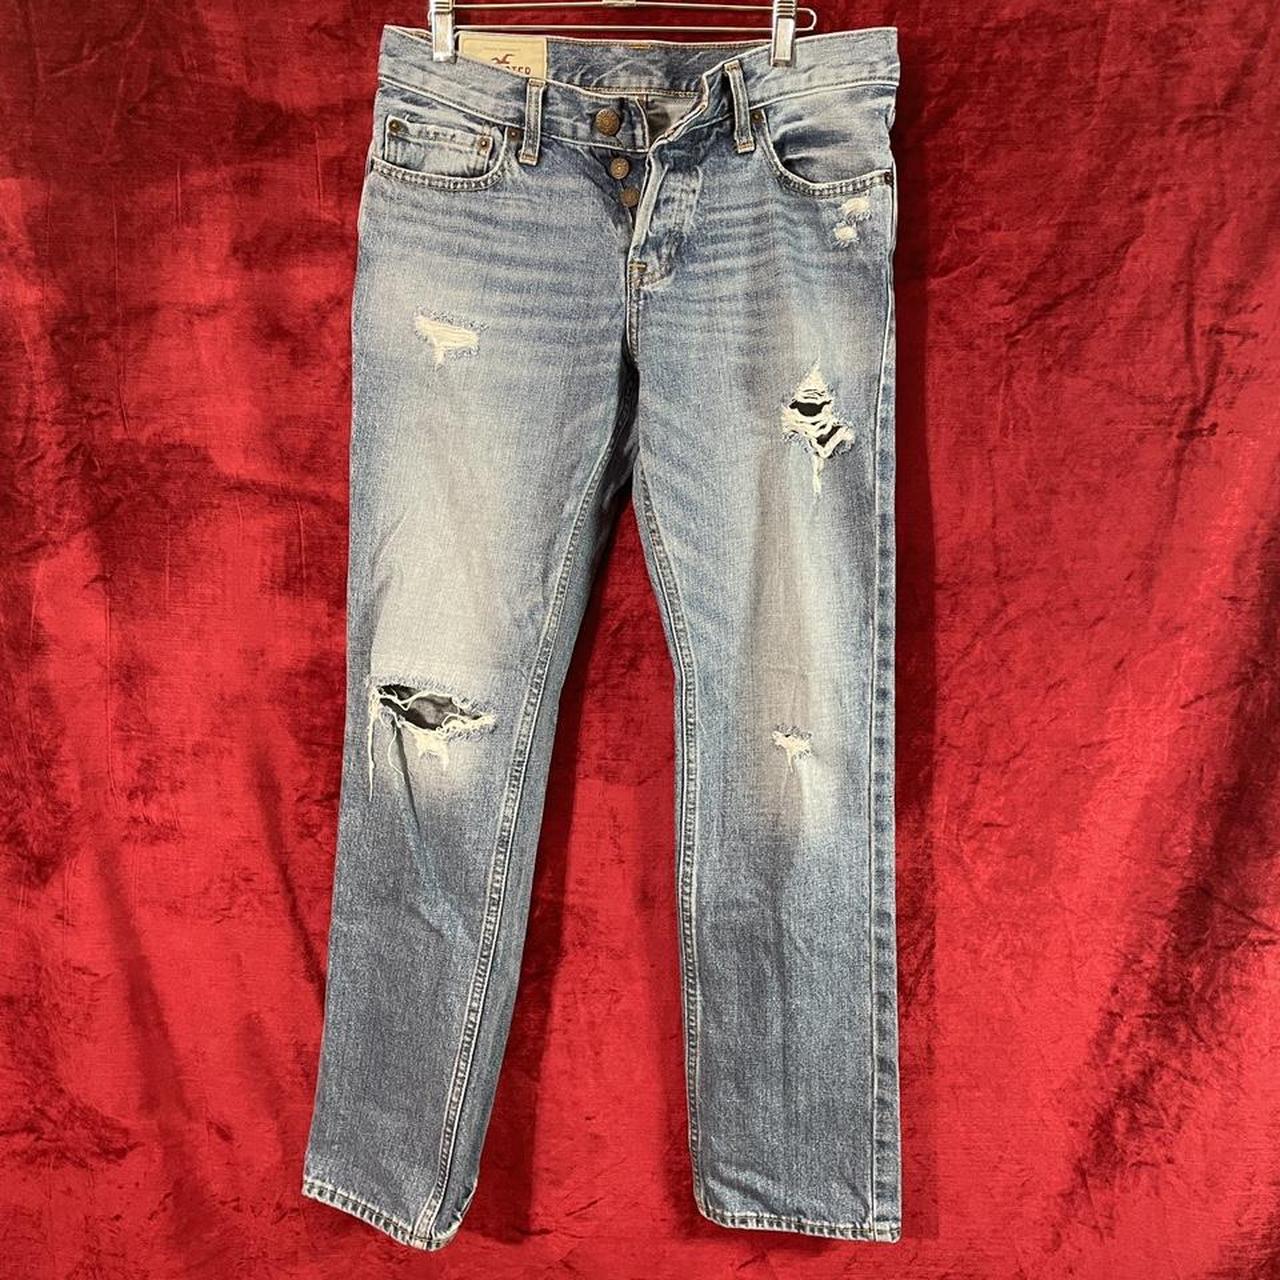 American Eagle ripped skinny jeans. medium wash - Depop